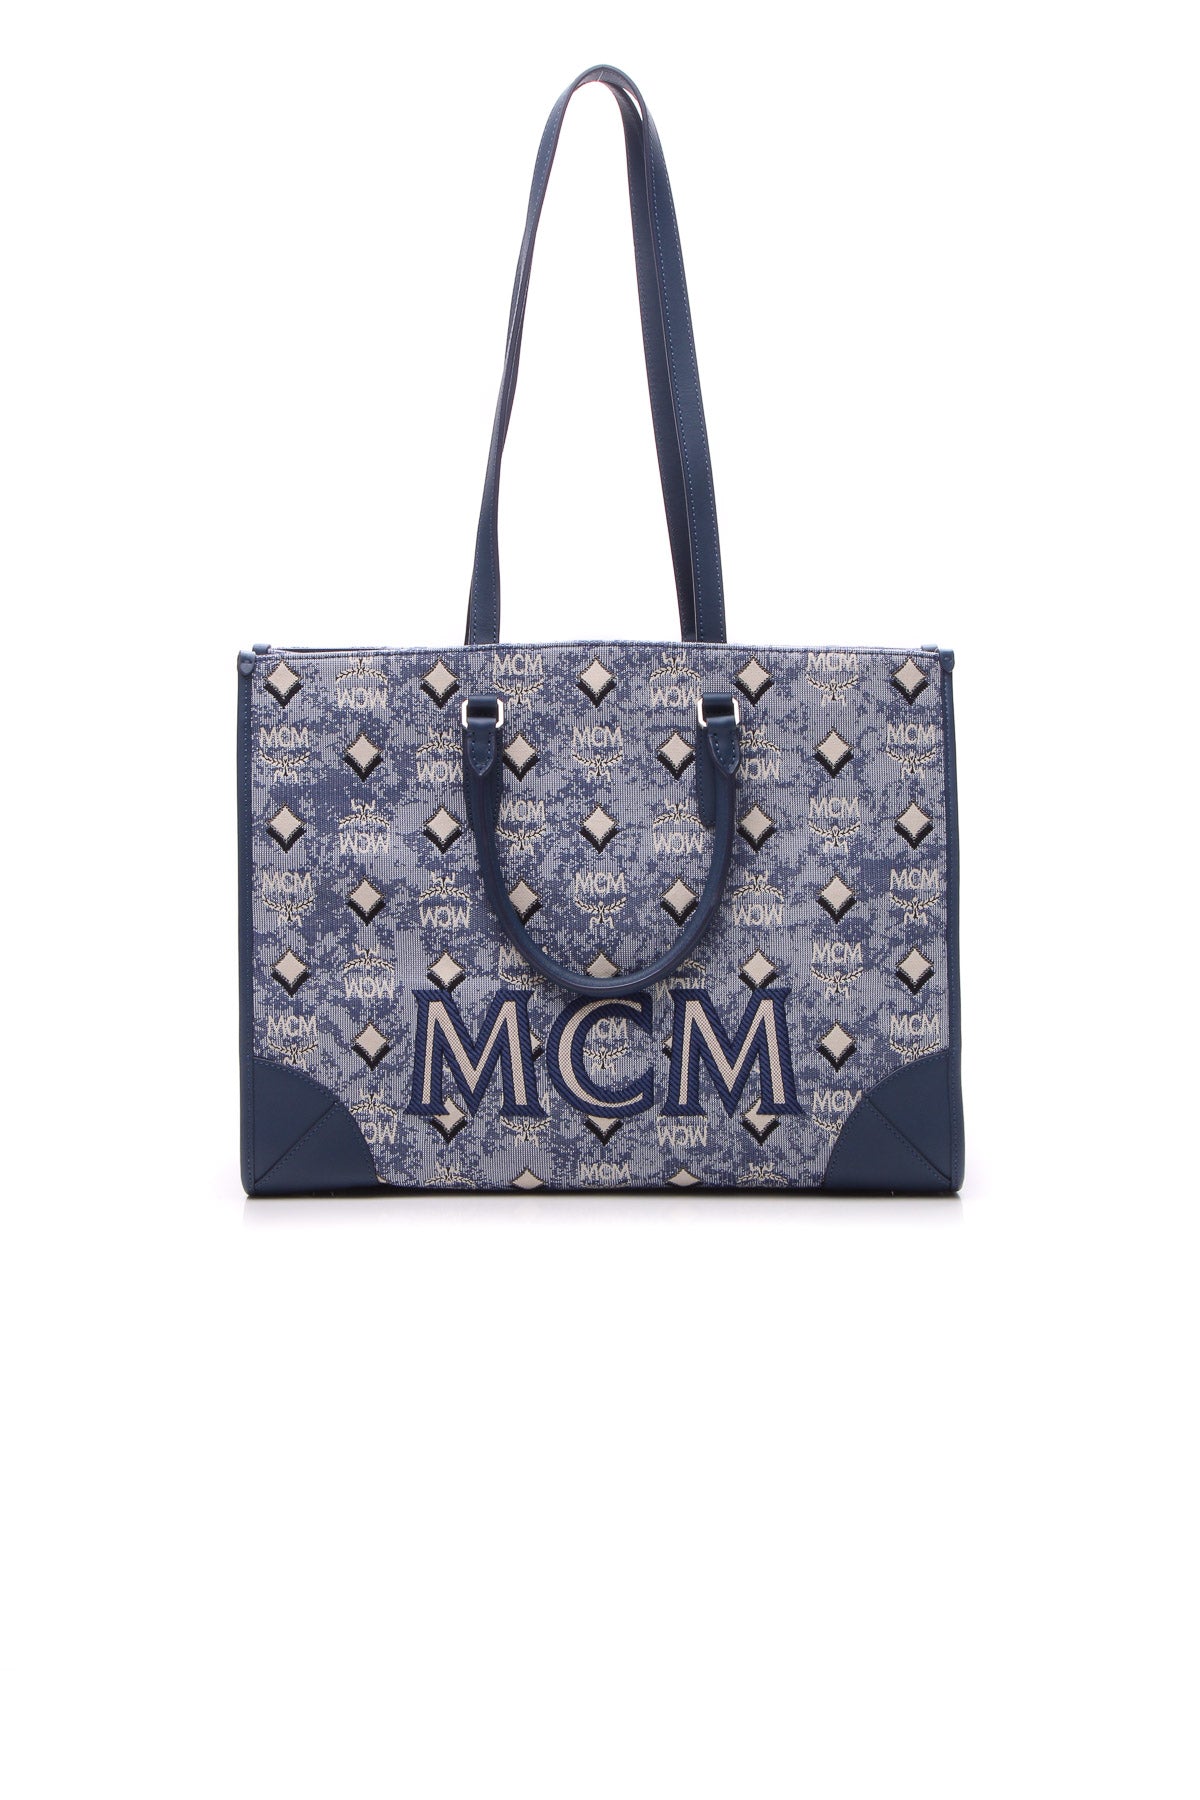 MCM Lion Tote Bags